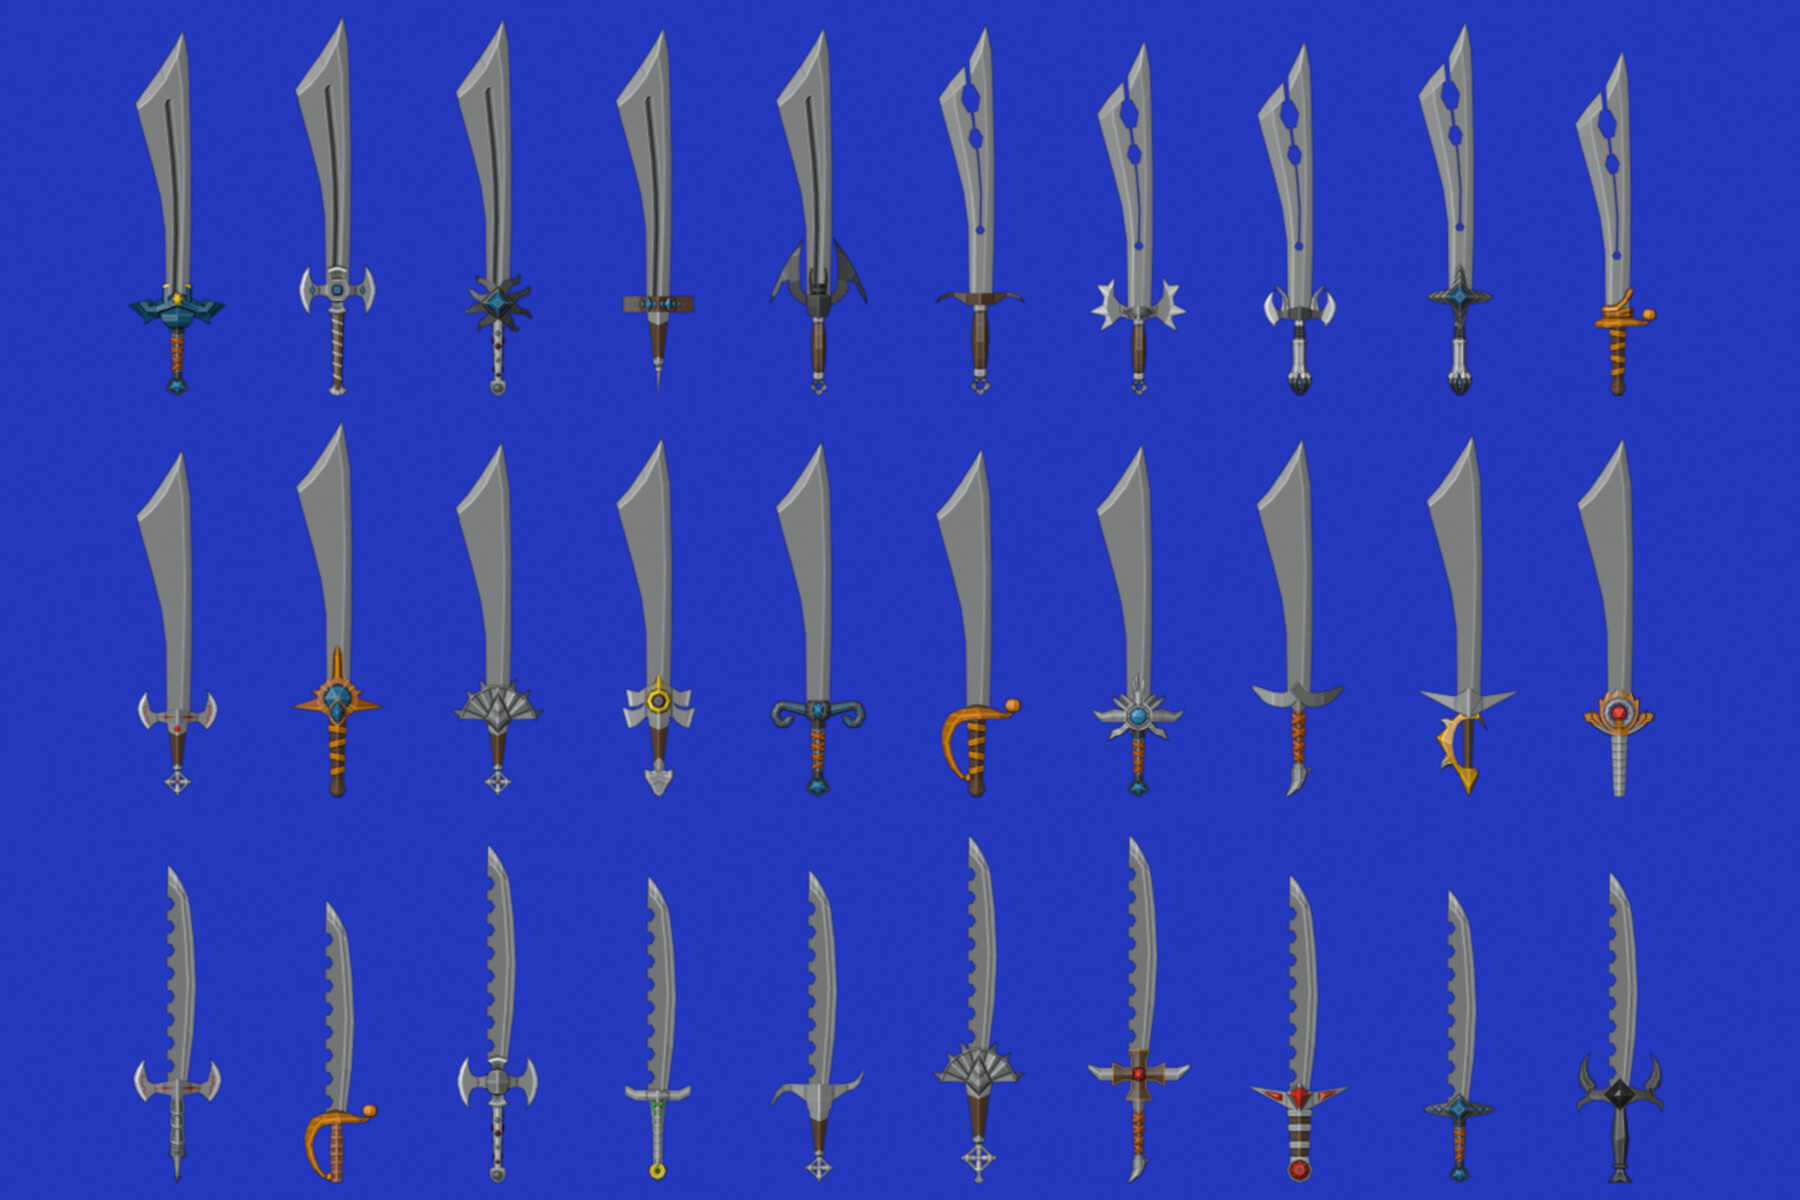 1.4.7][FML/ML] Mythical Swords MOD (Swords with POWER